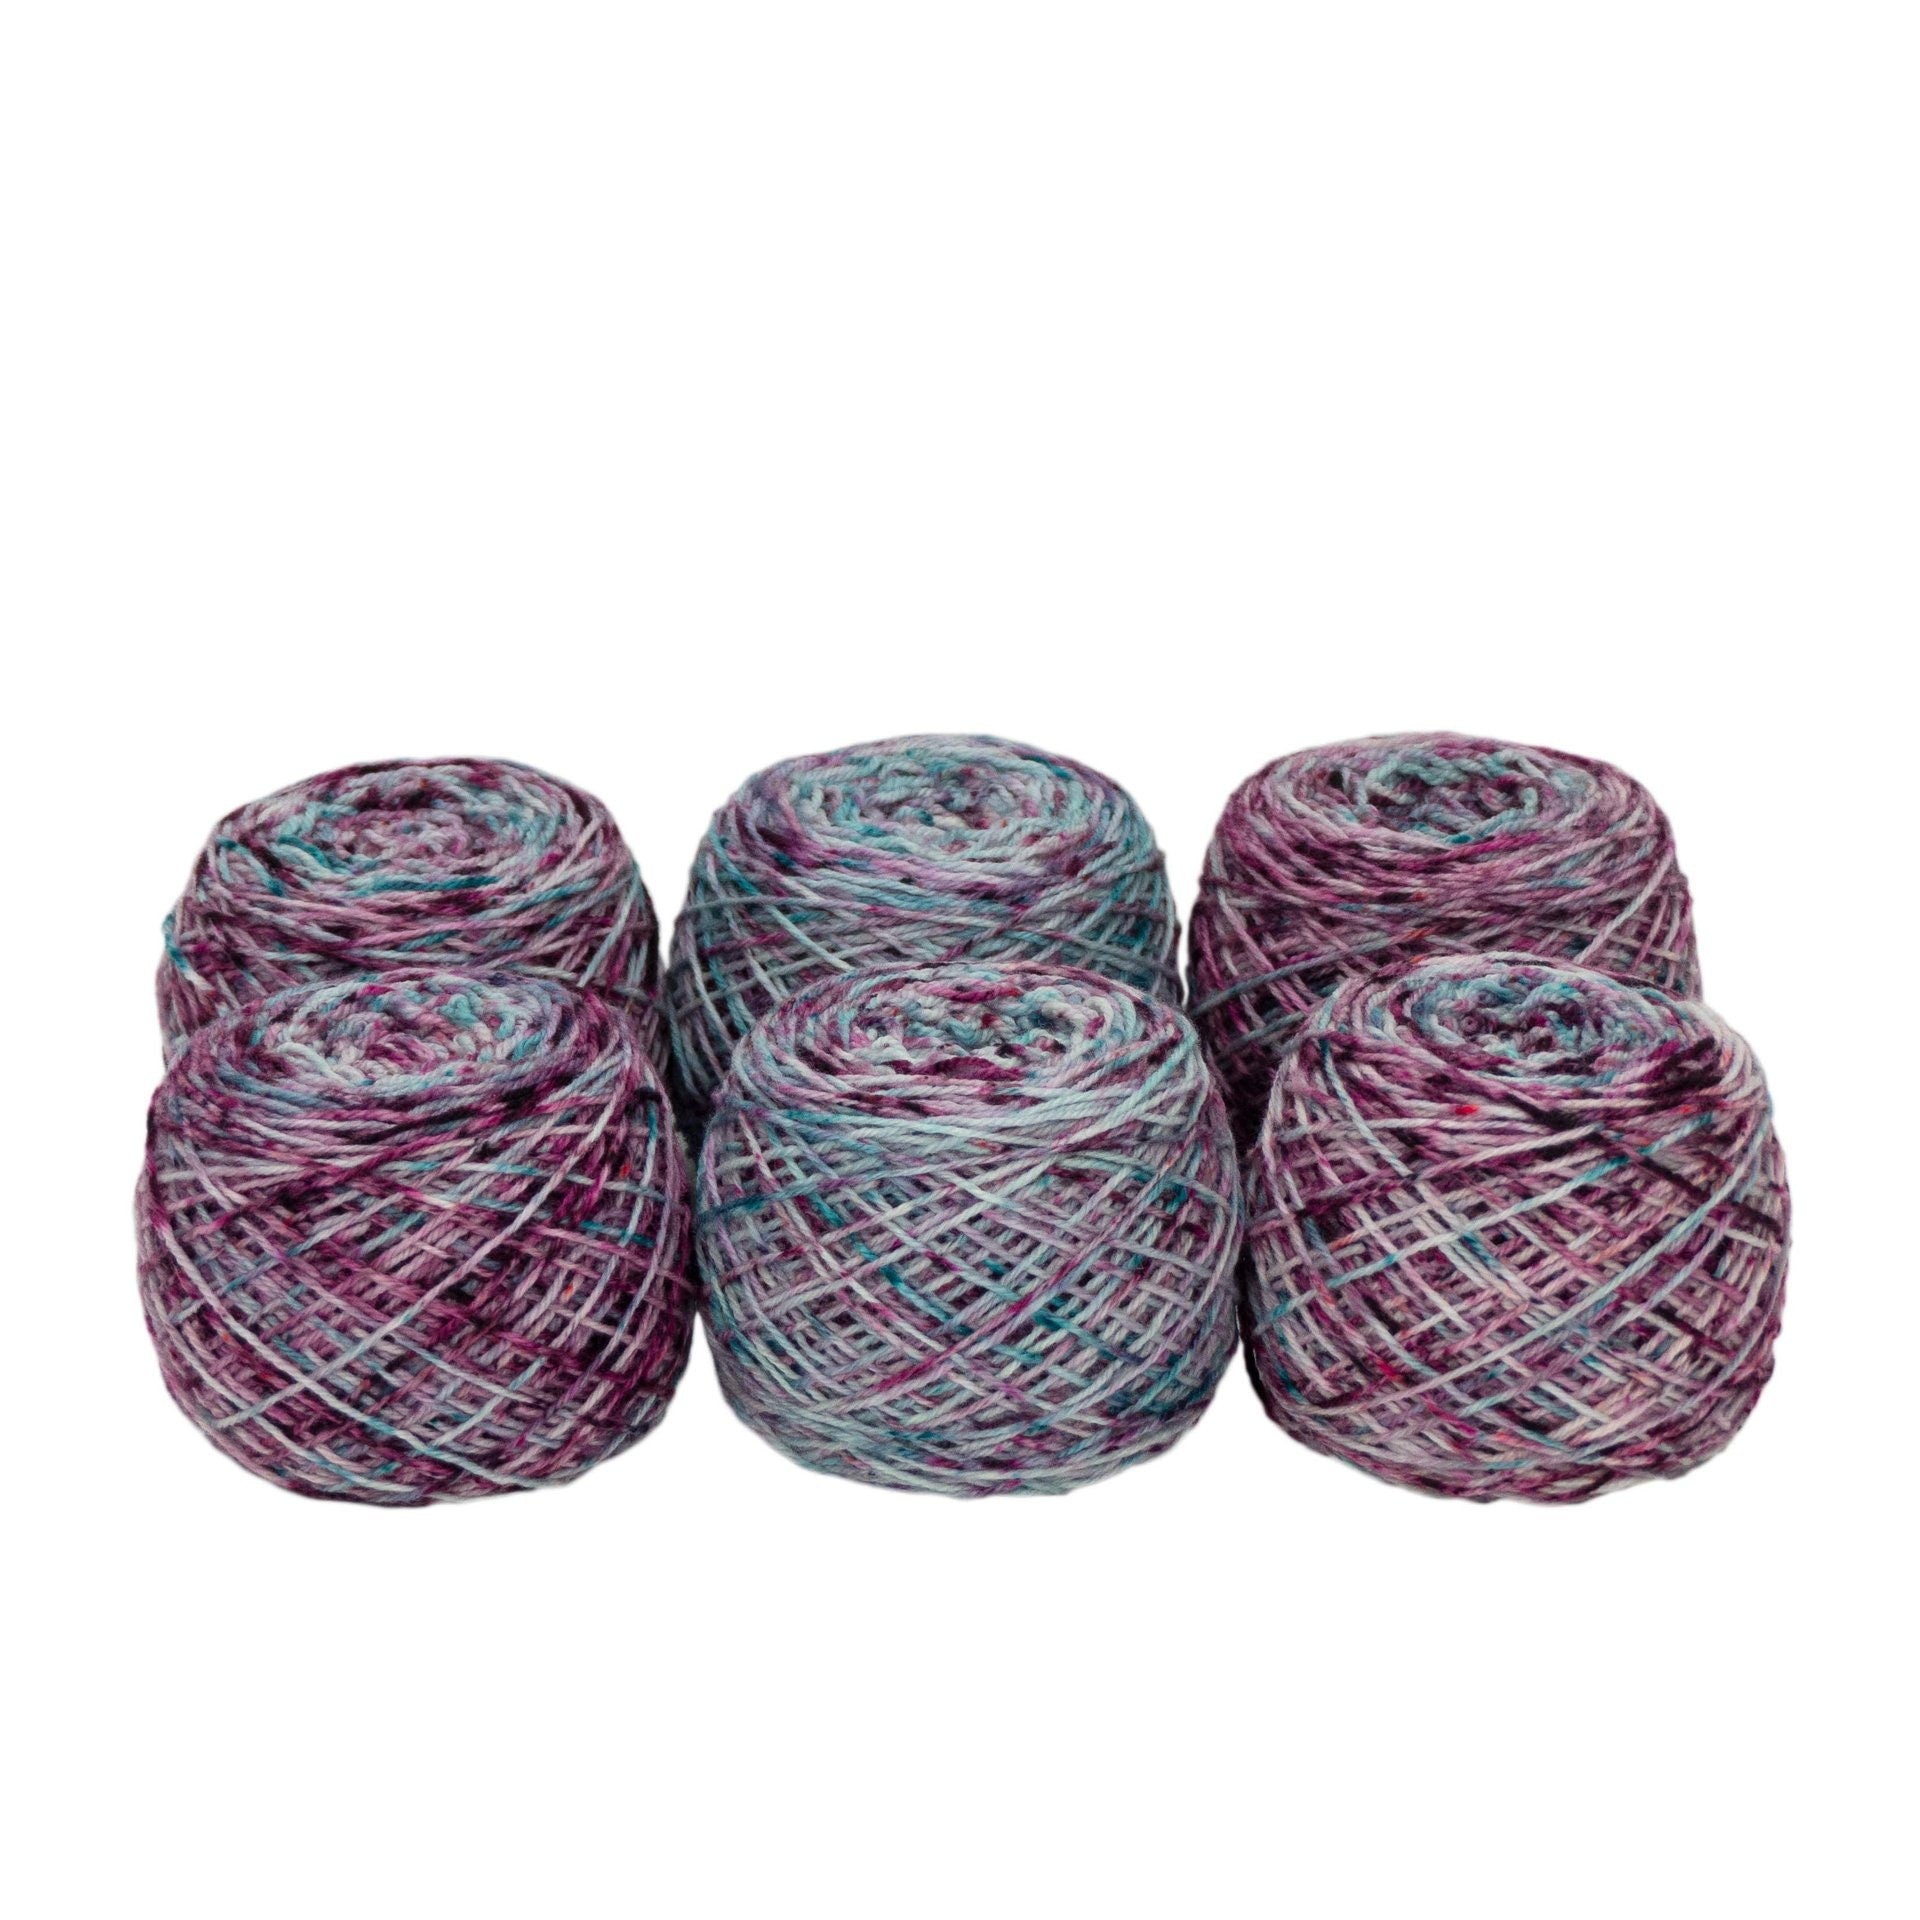 Fraternal Sock Twins " Whirl & Tilt " - Llark Hand Dyed Gradient Speckle Sock Yarn Set